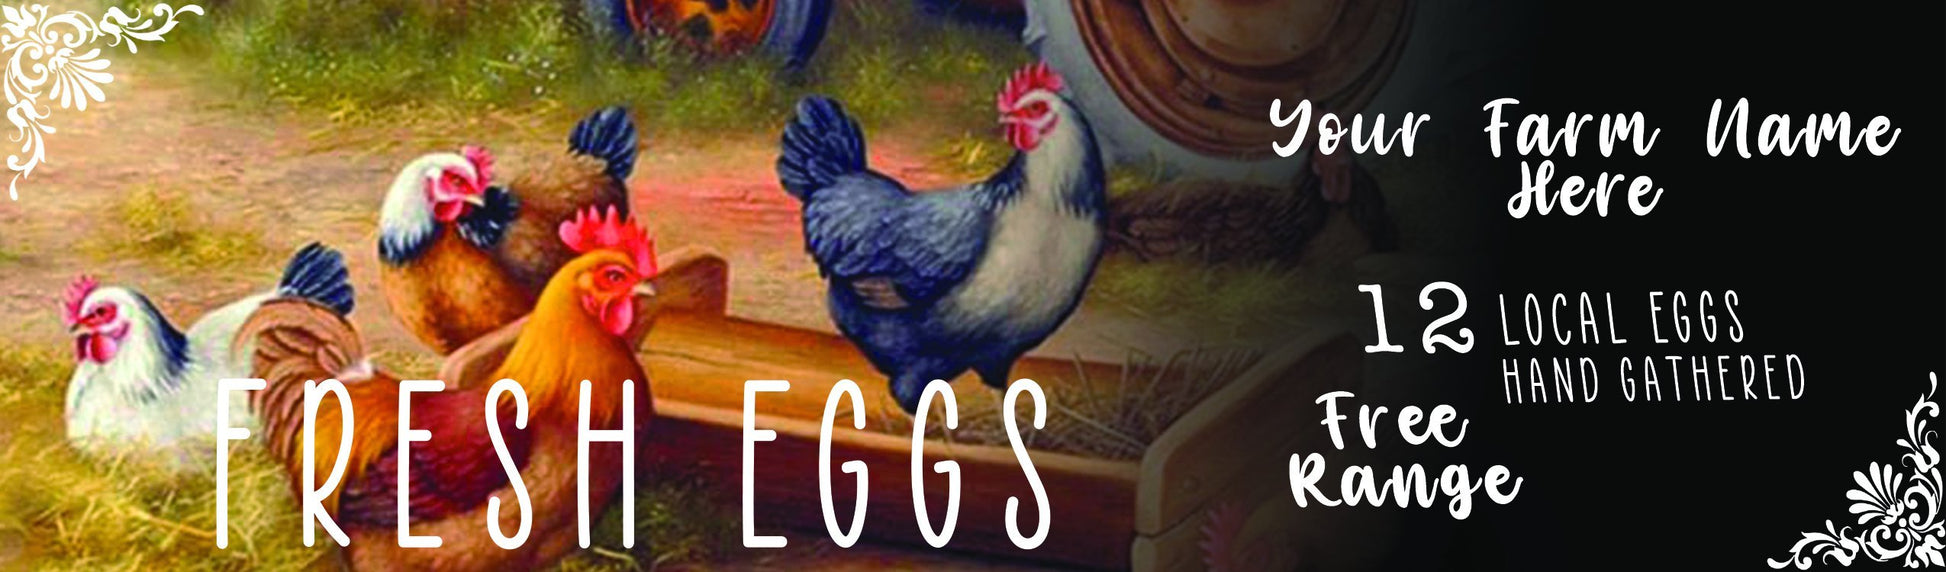 Homestead Farm Logo Egg Carton Stamp Label Farm Fresh Eggs 